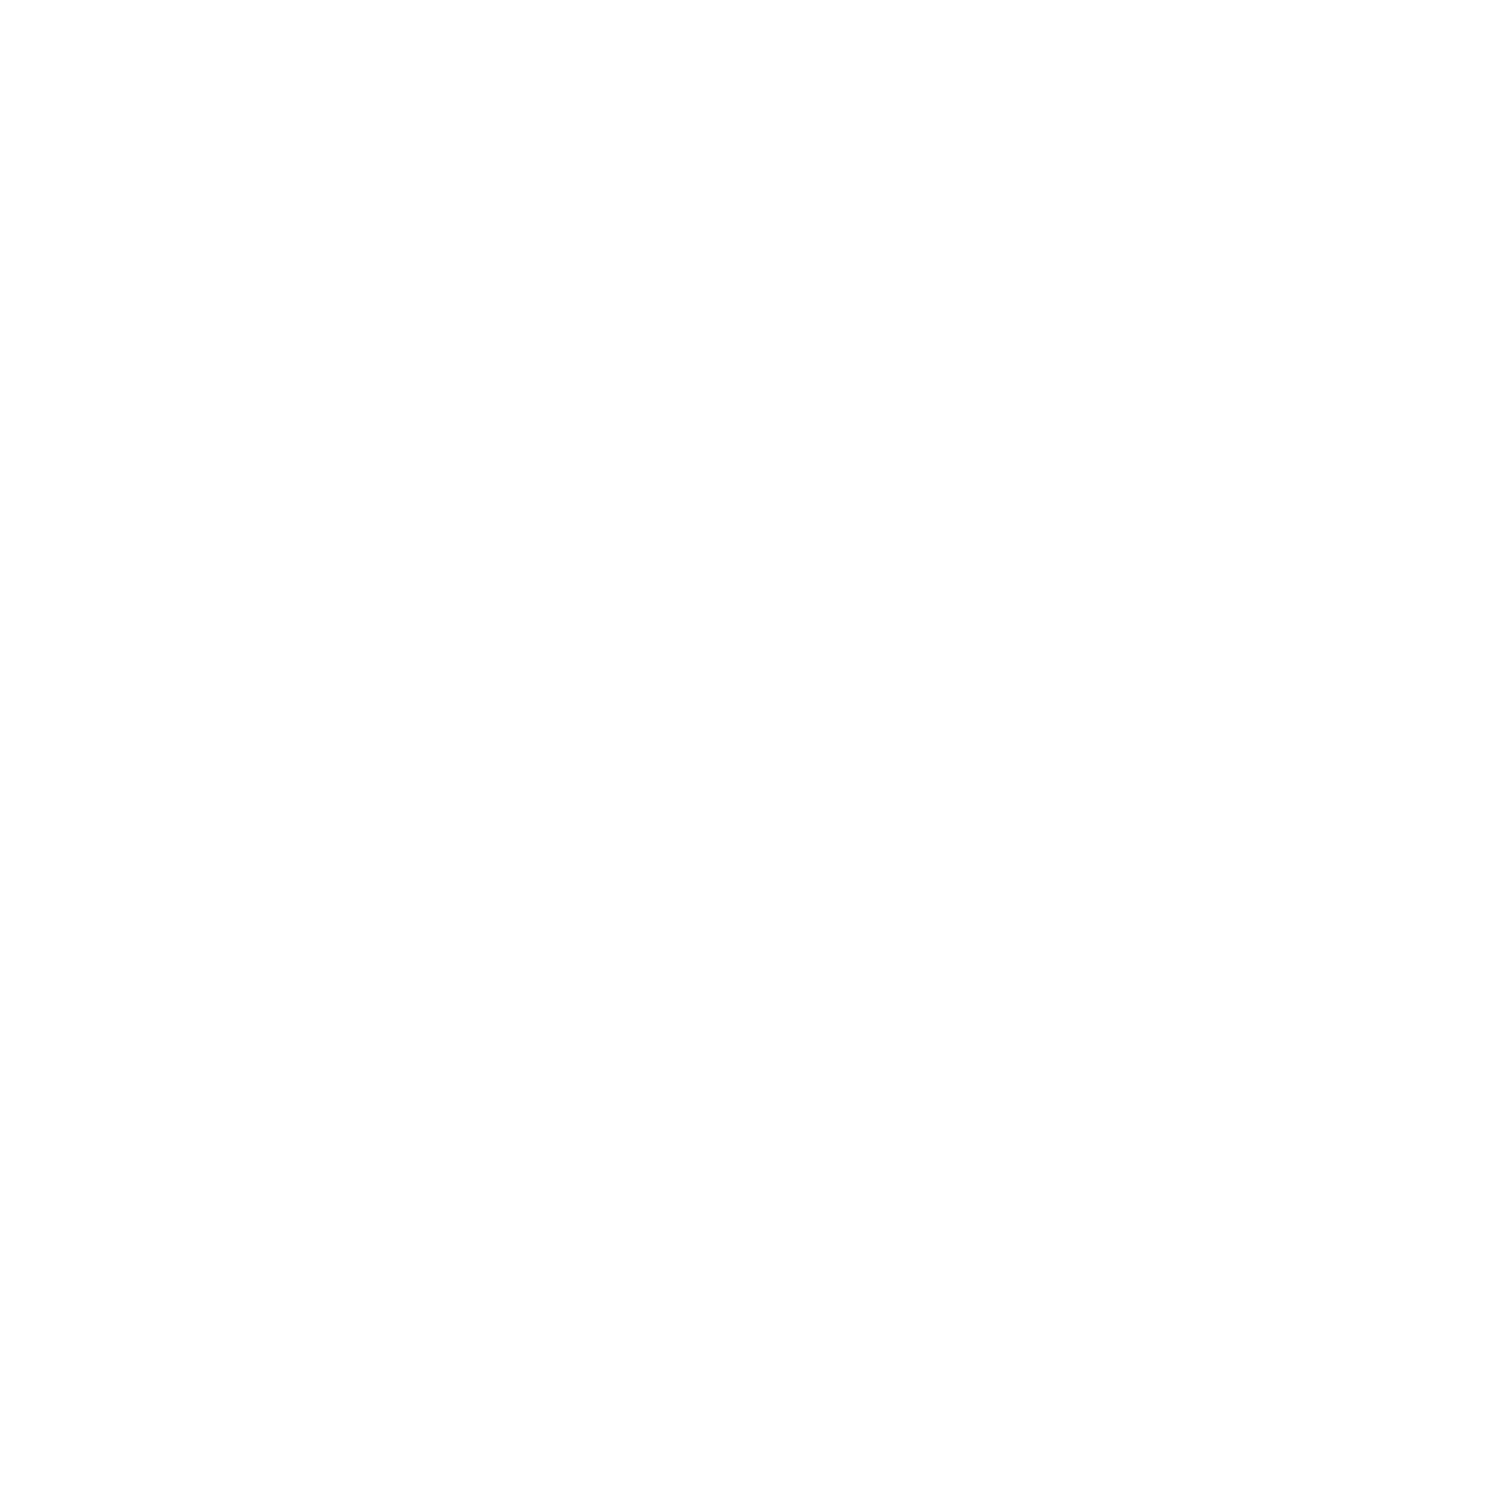 TEAM AXLE-R8 Logo